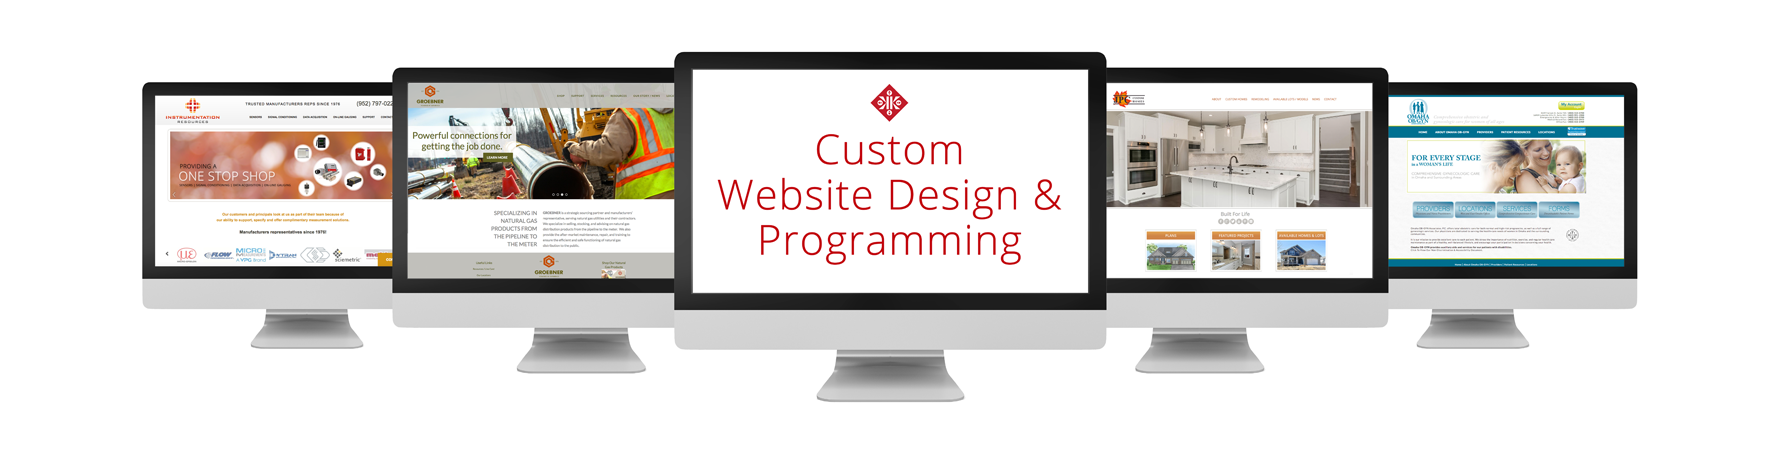 Kaul Design Group - Web Design & Development